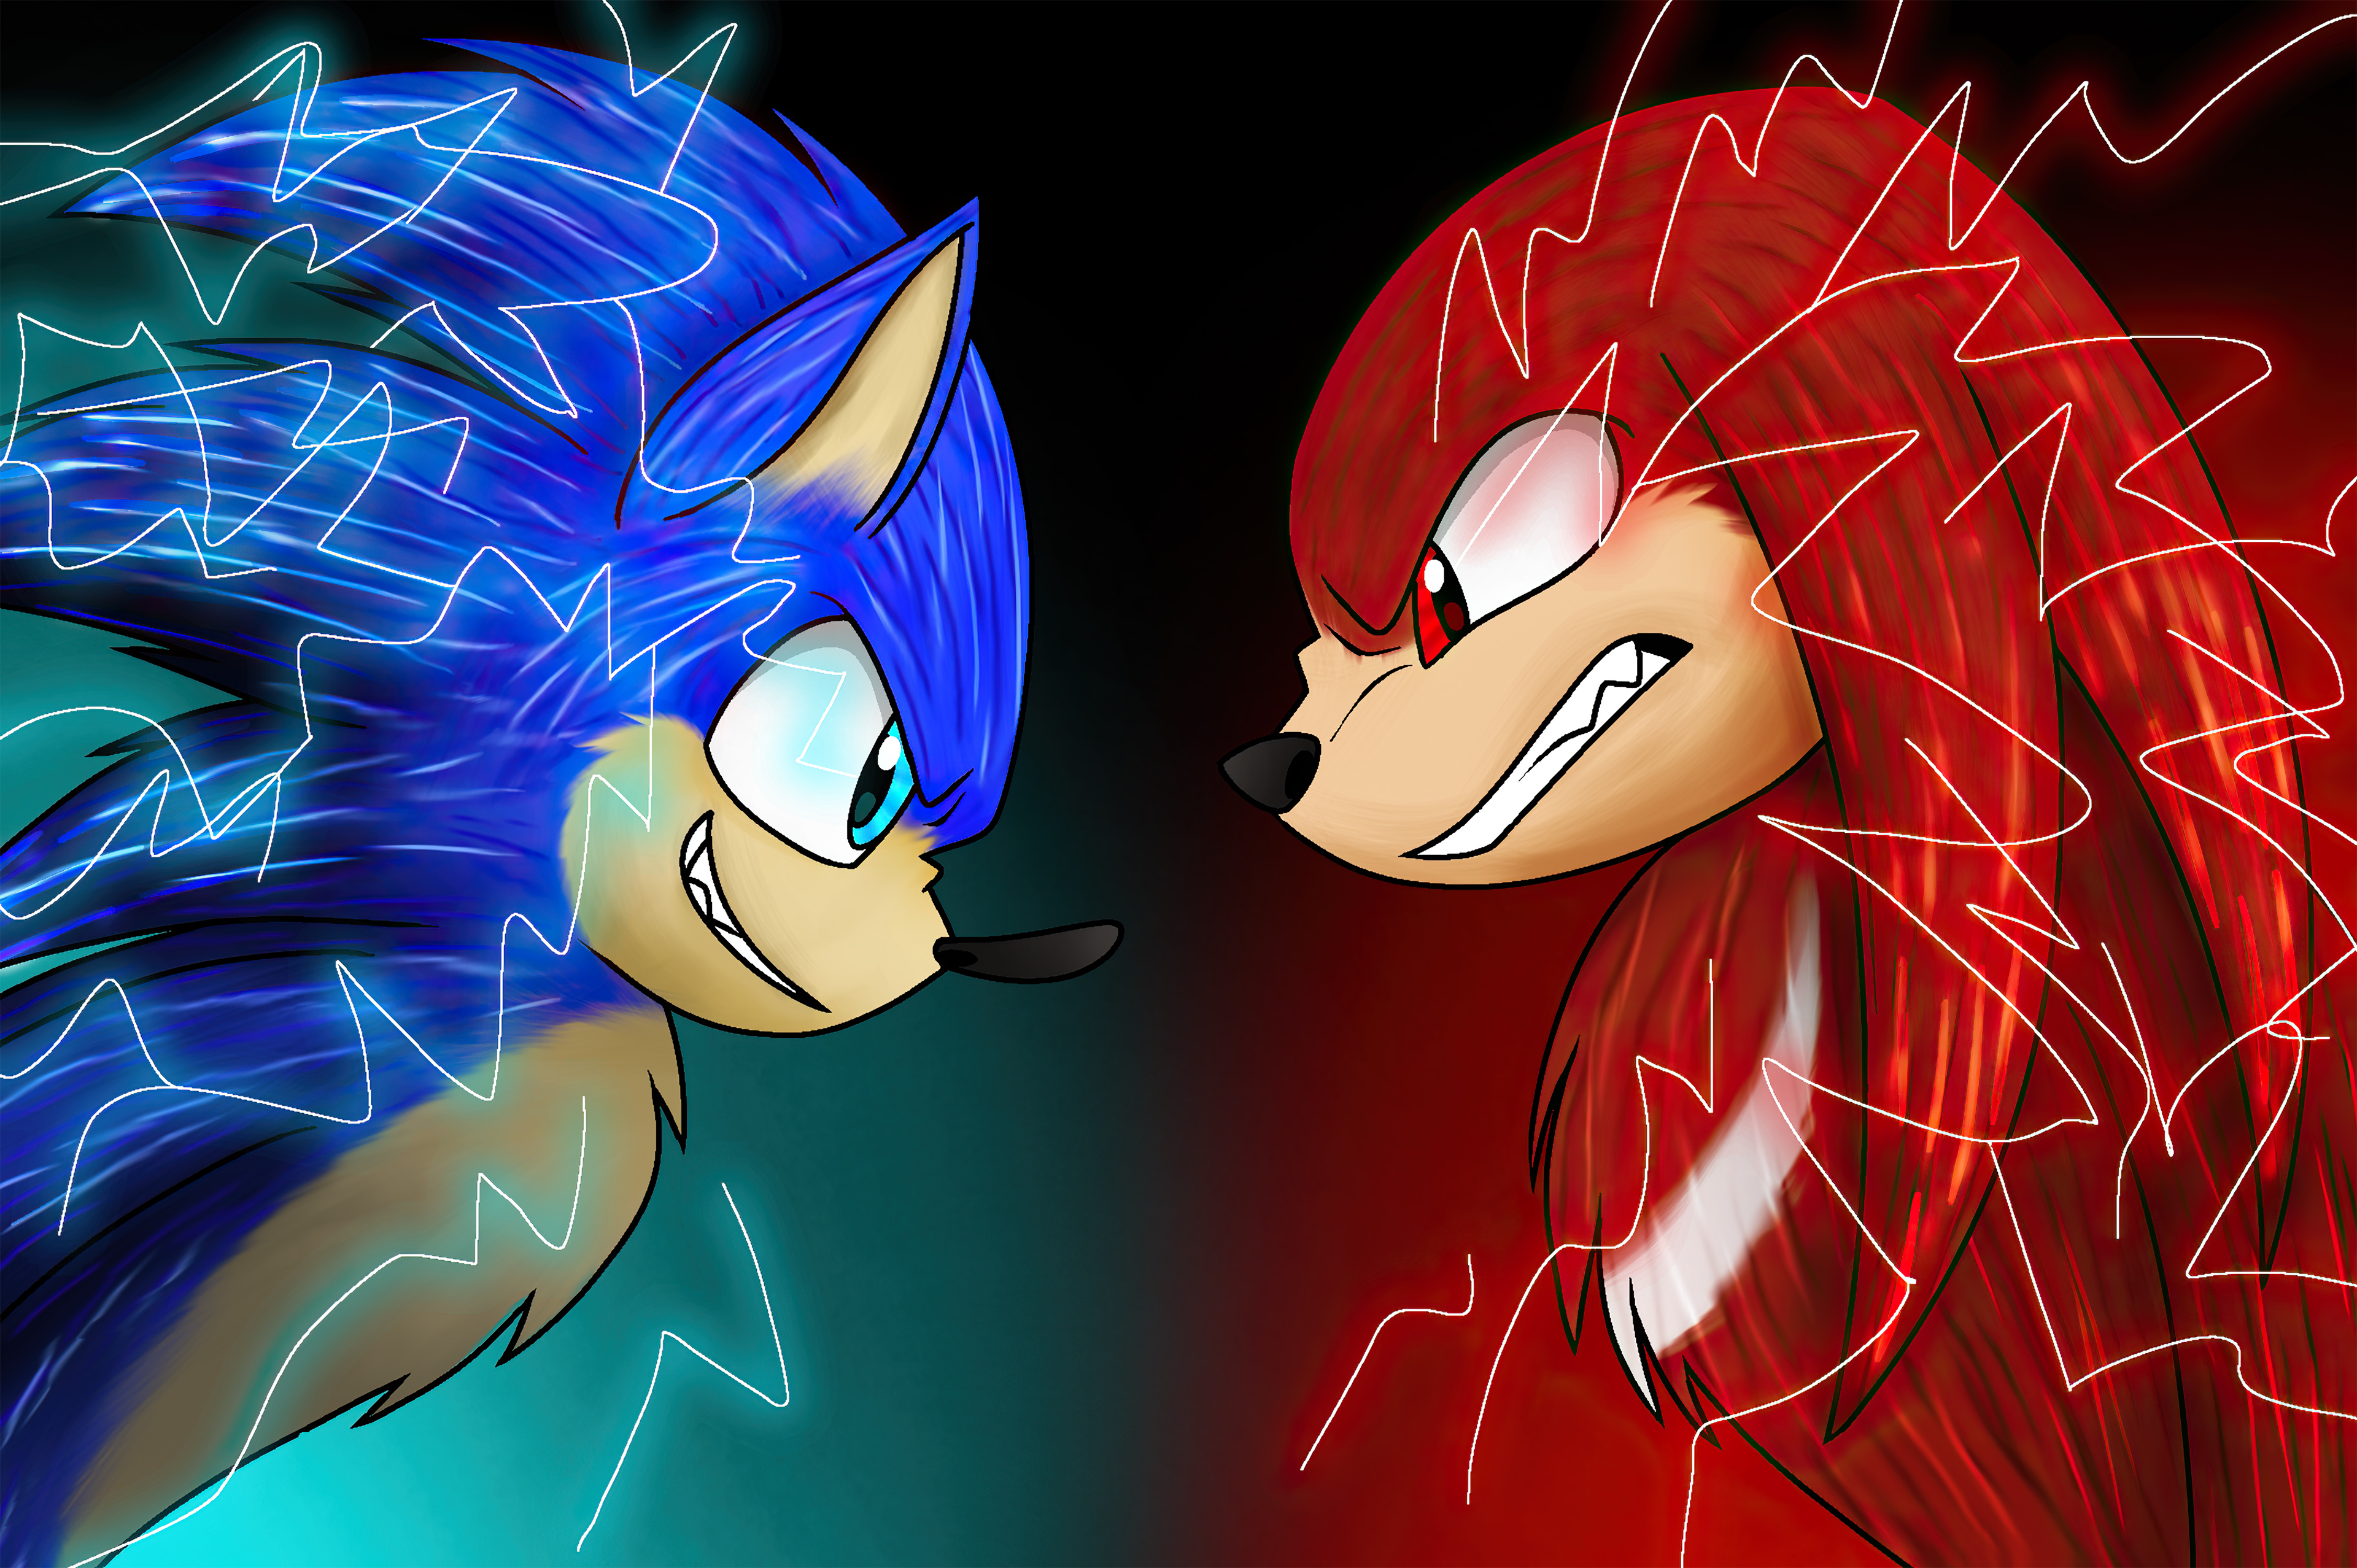 Sonic The Hedgehog 4K 8K Wallpapers